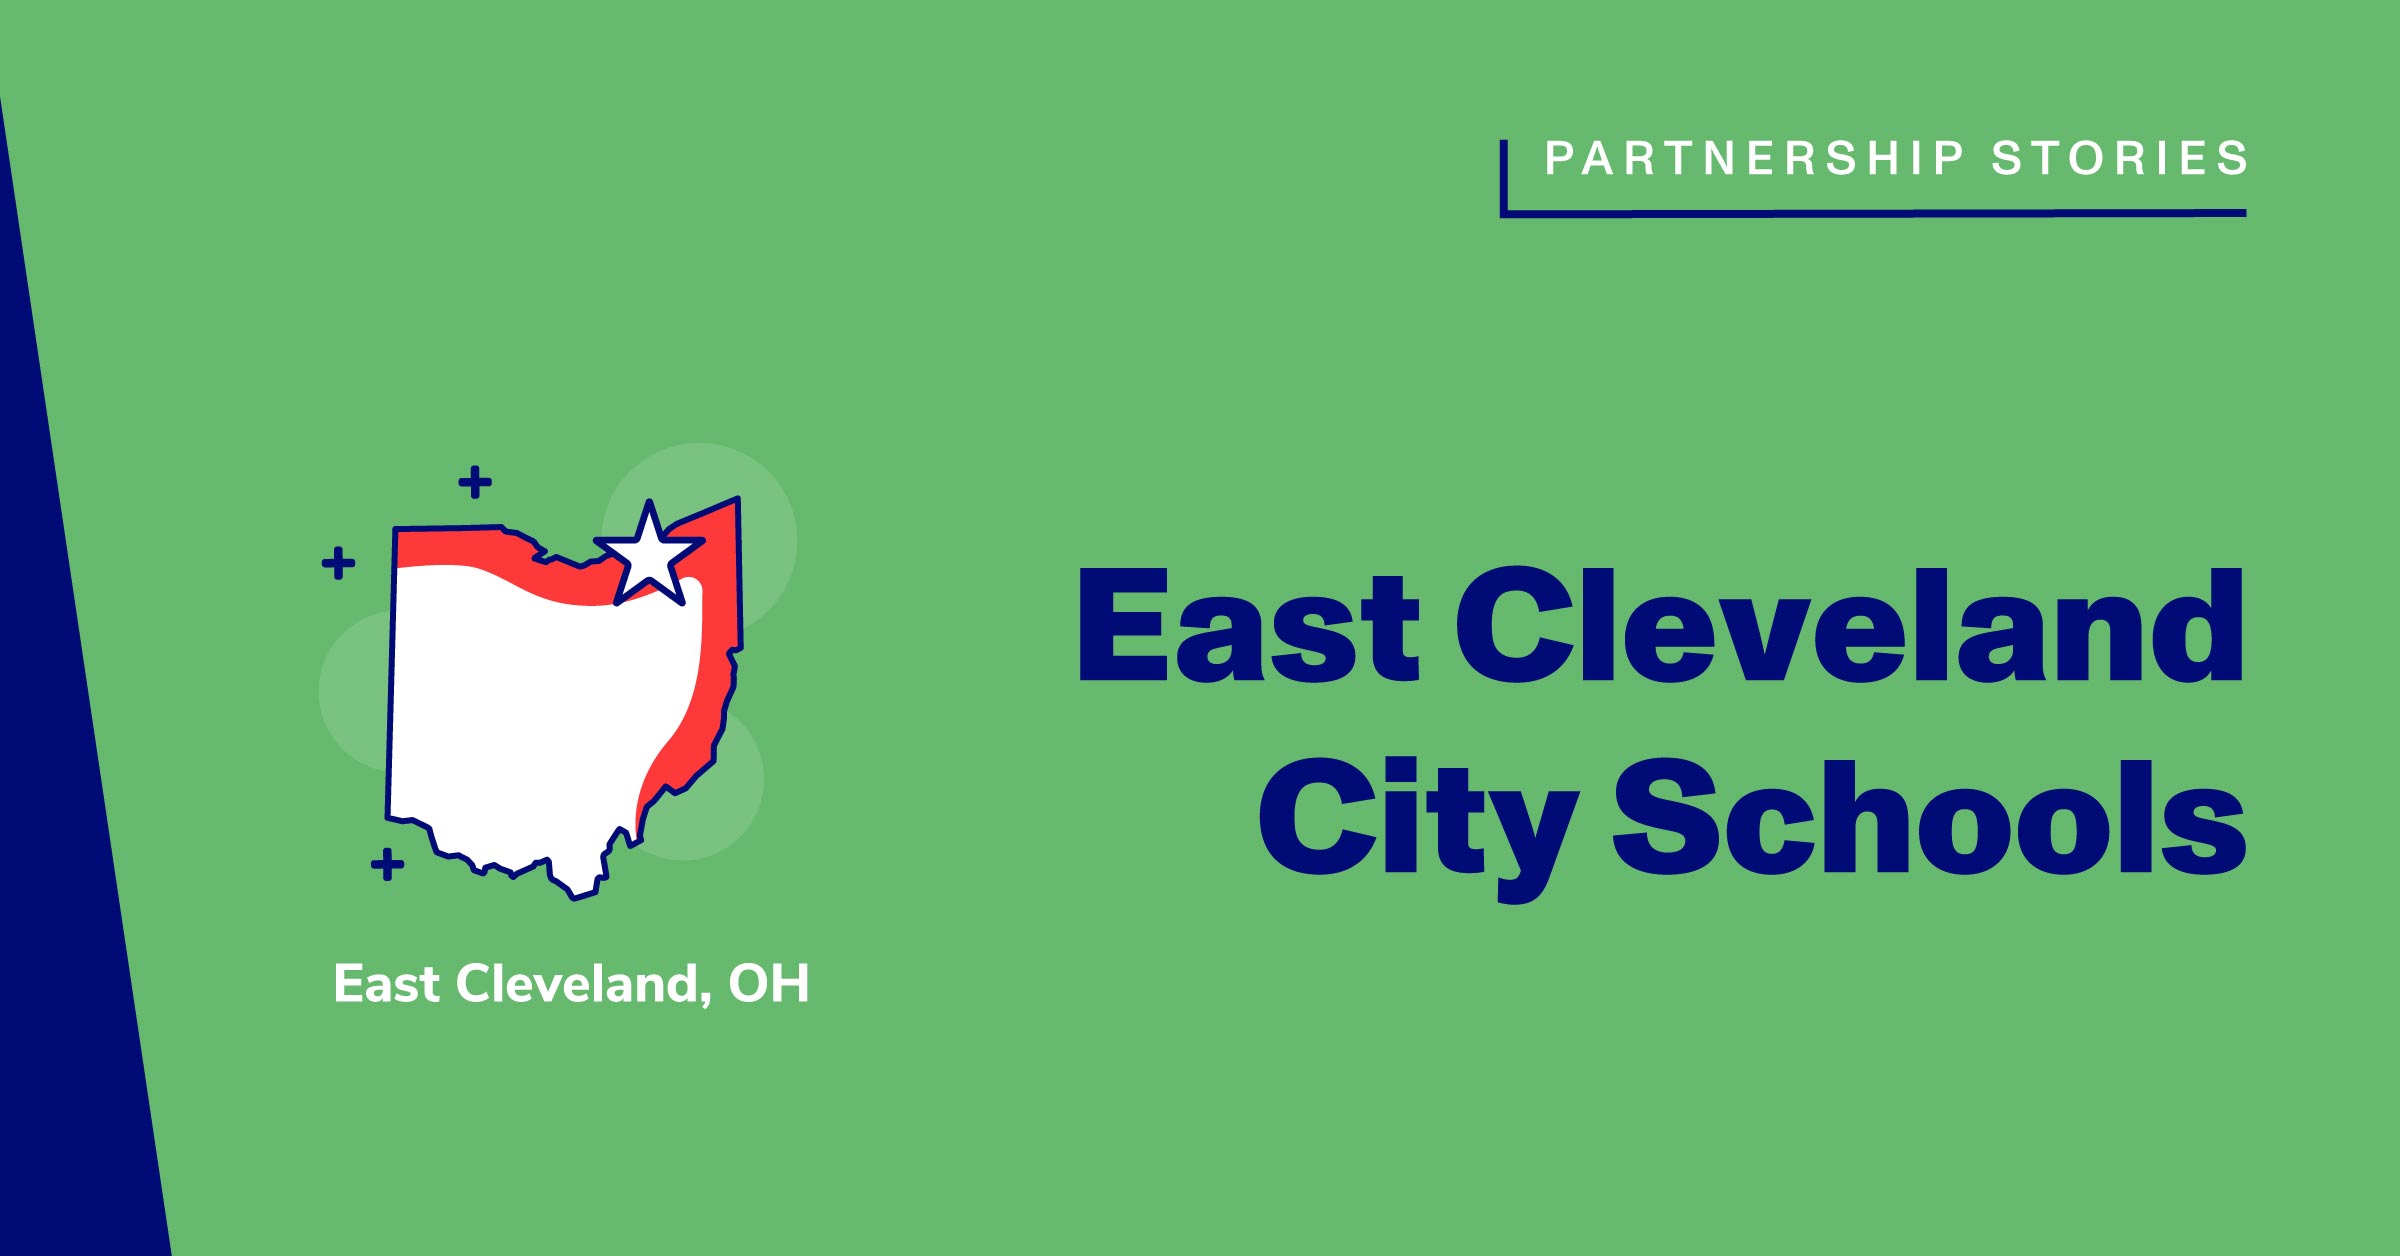 East Cleveland City Schools: East Cleveland, Ohio